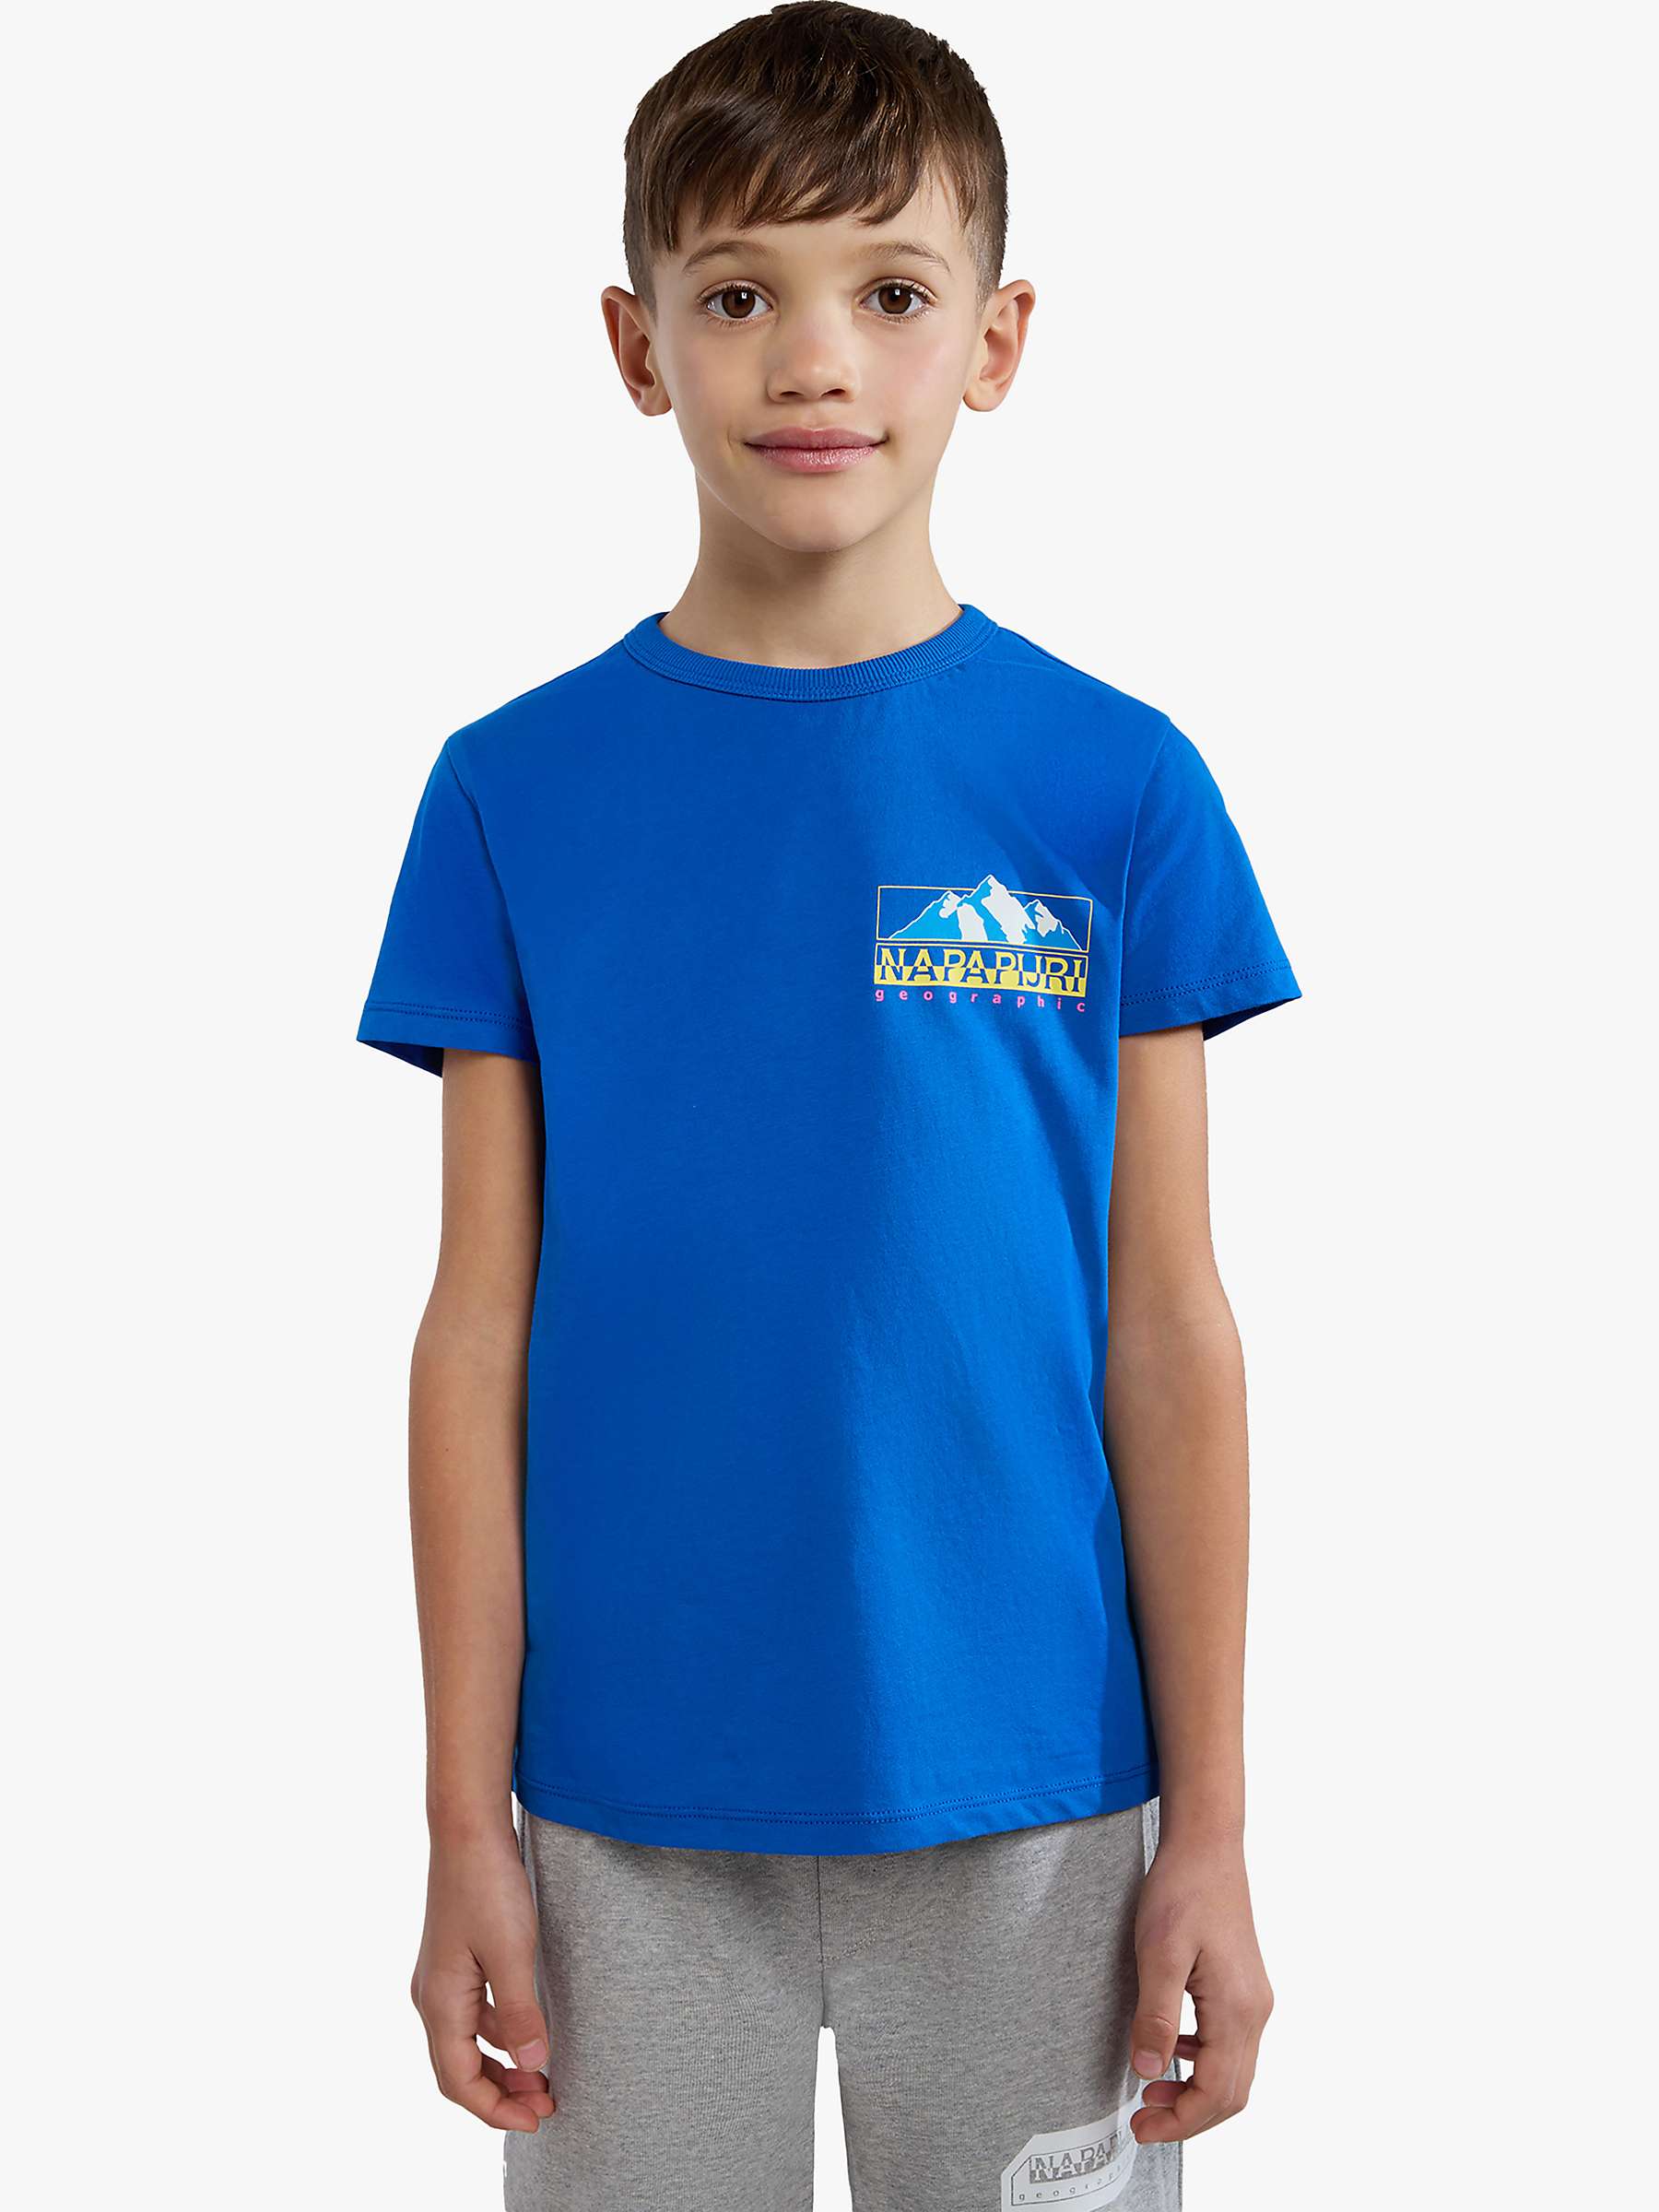 Buy Napapijri Kids' Liard Logo Mountain Graphic T-Shirt, Royal Blue Online at johnlewis.com